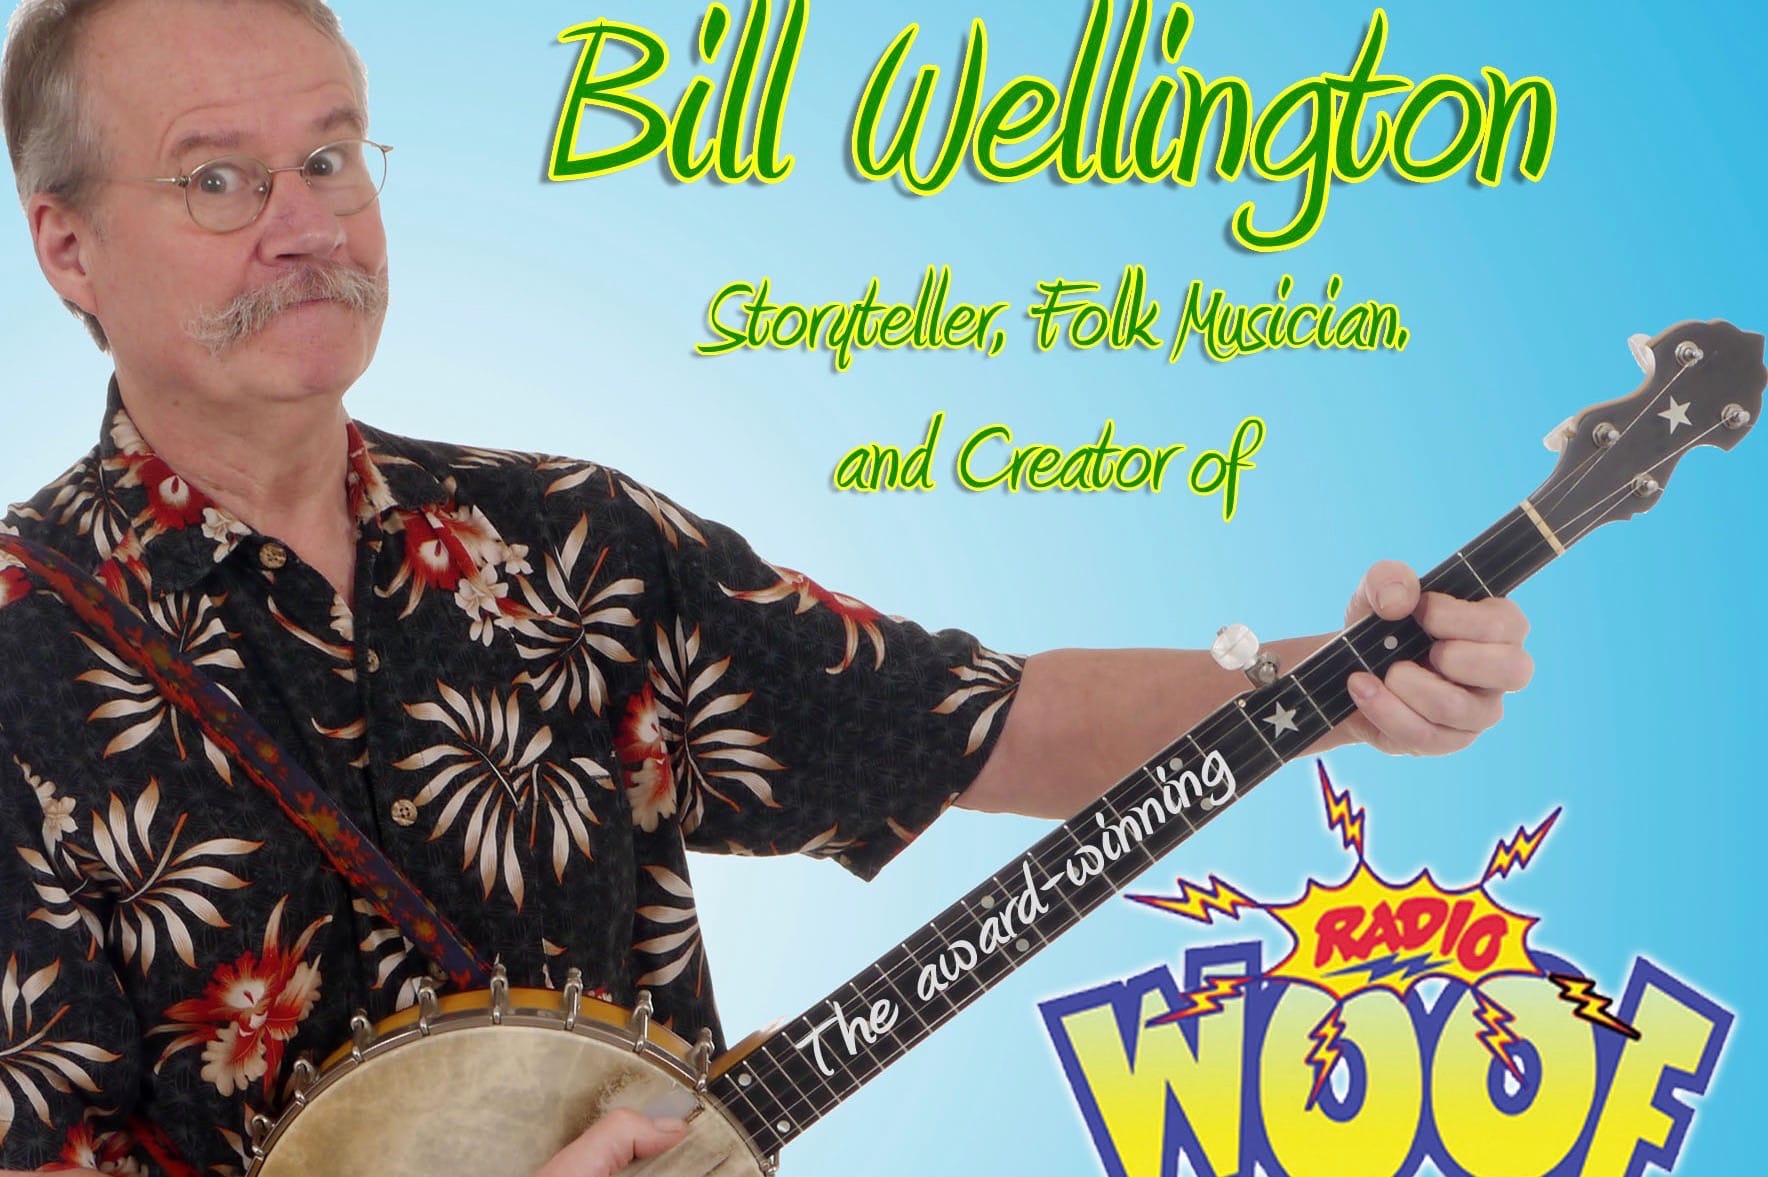 photo of Bill Wellington holding a banjo